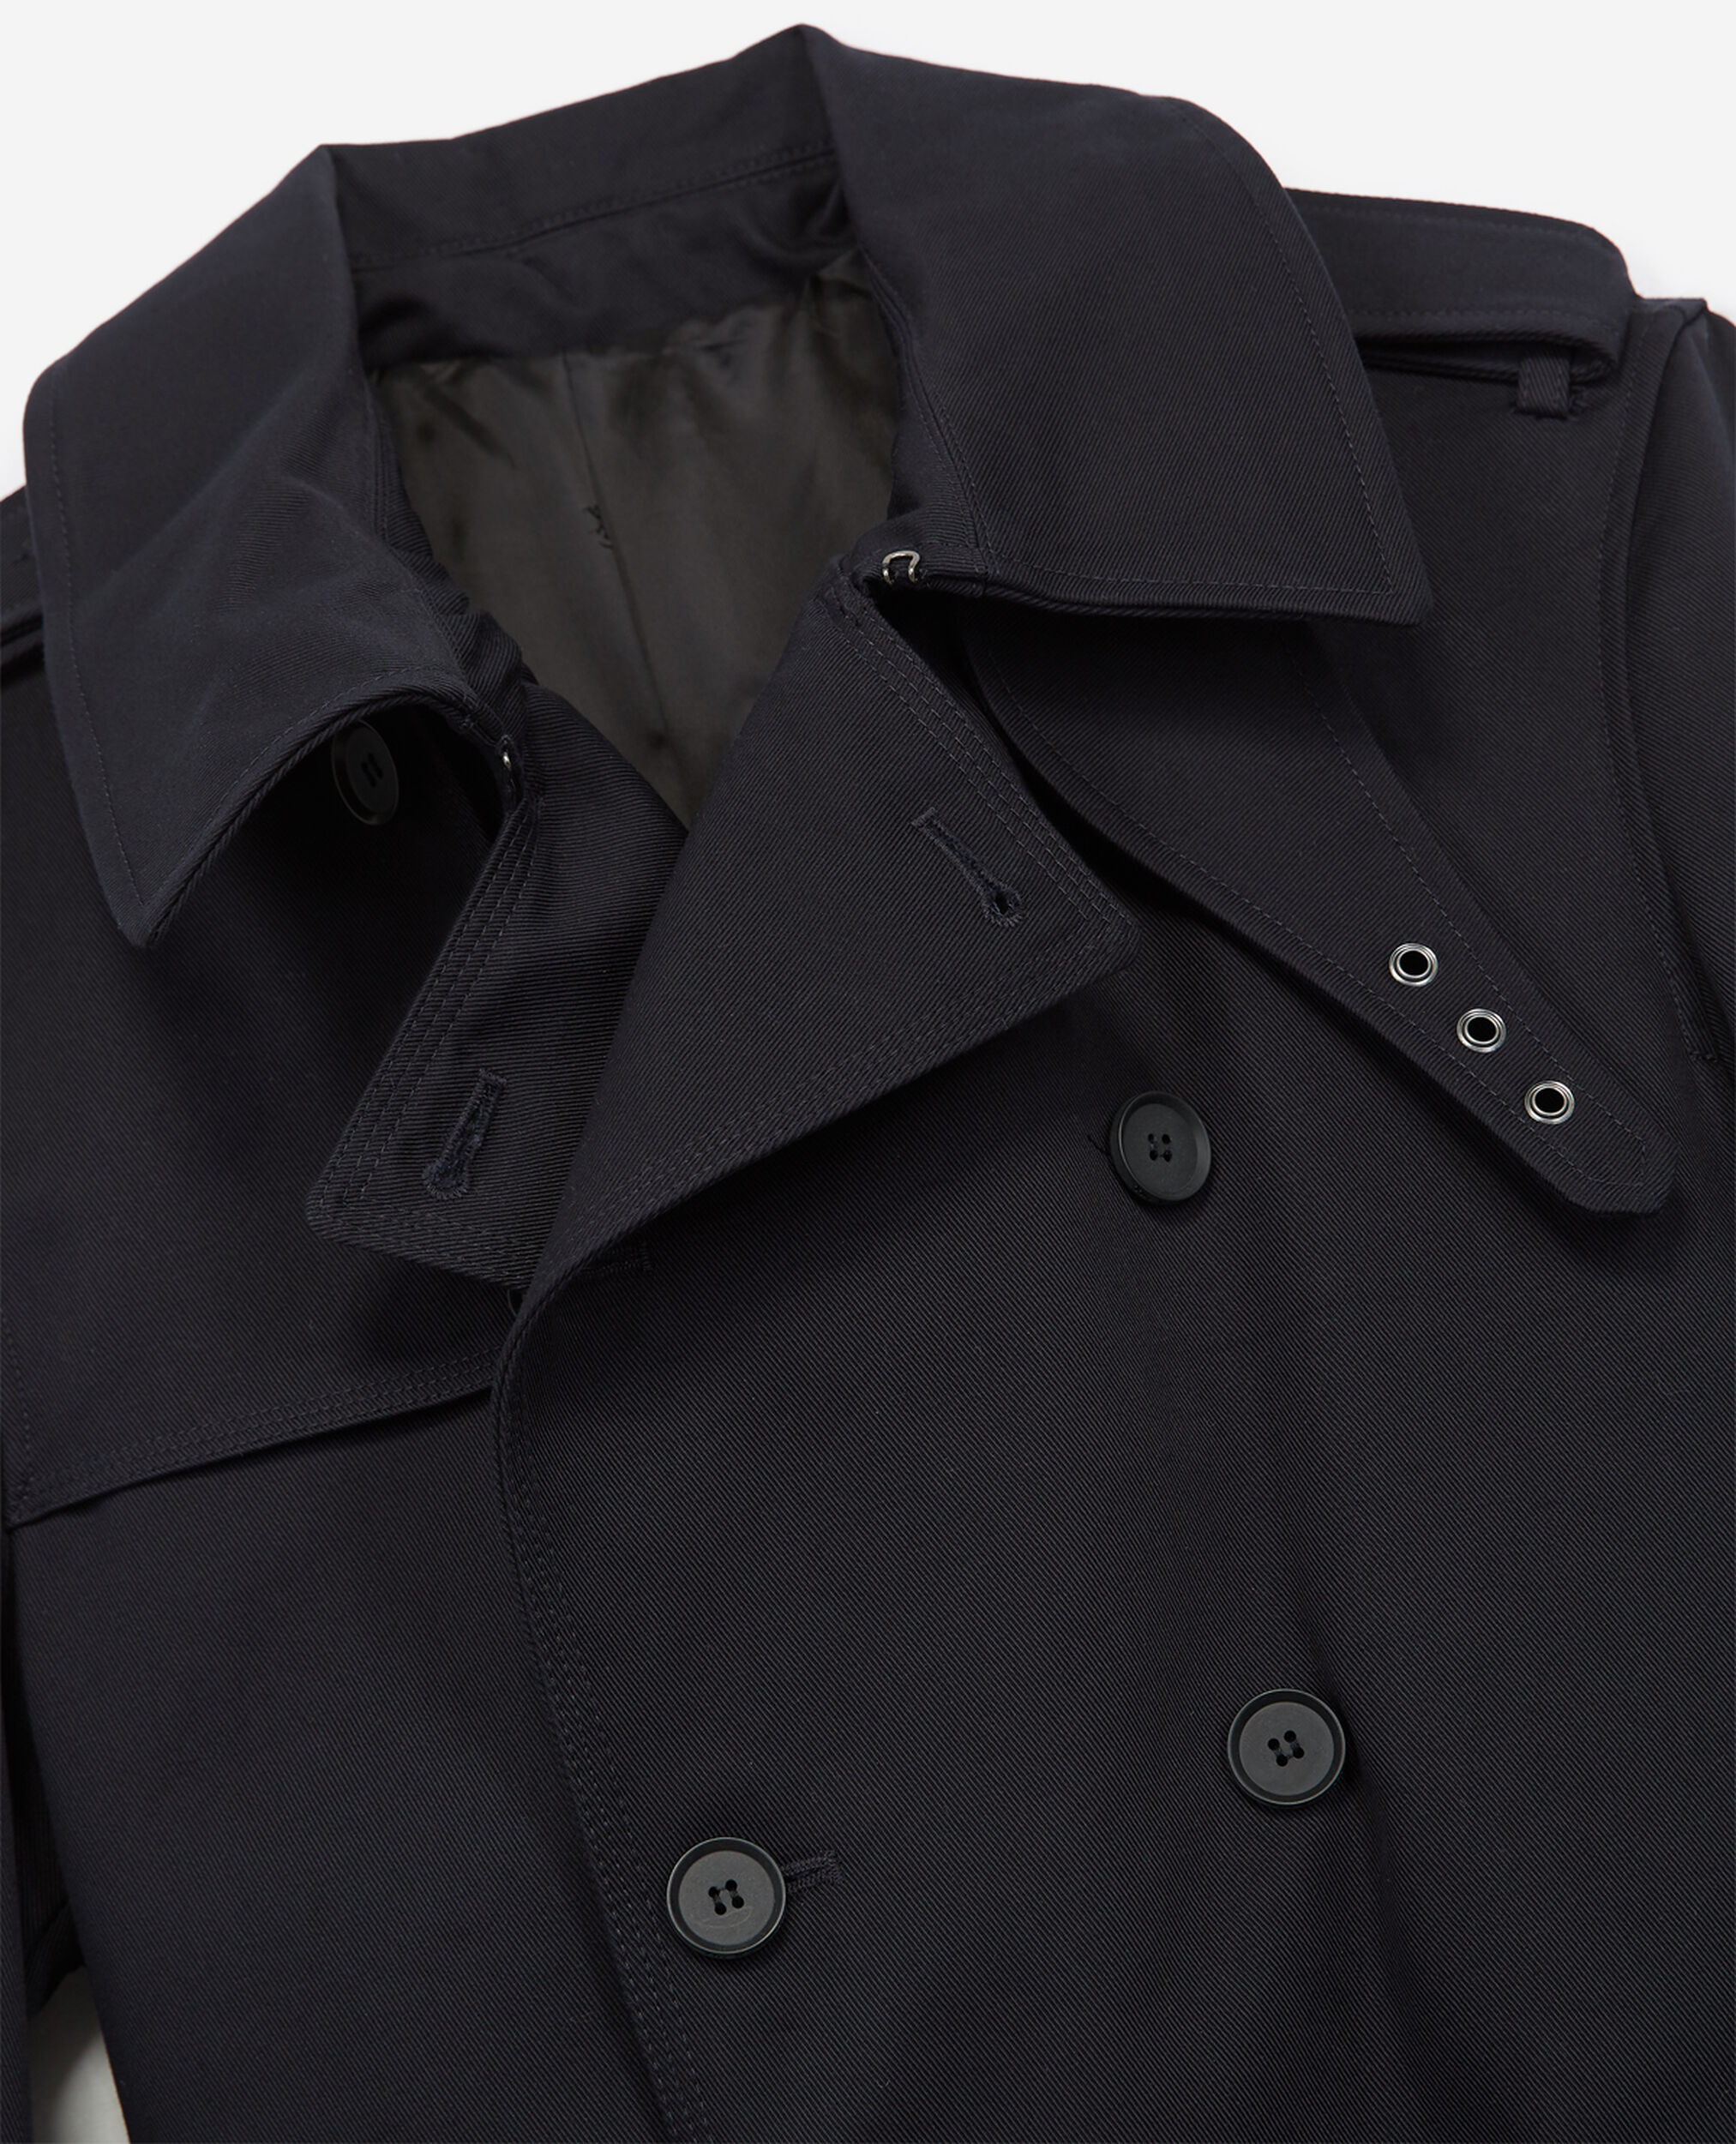 Navy blue trench coat in cotton gabardine, DARK NAVY, hi-res image number null